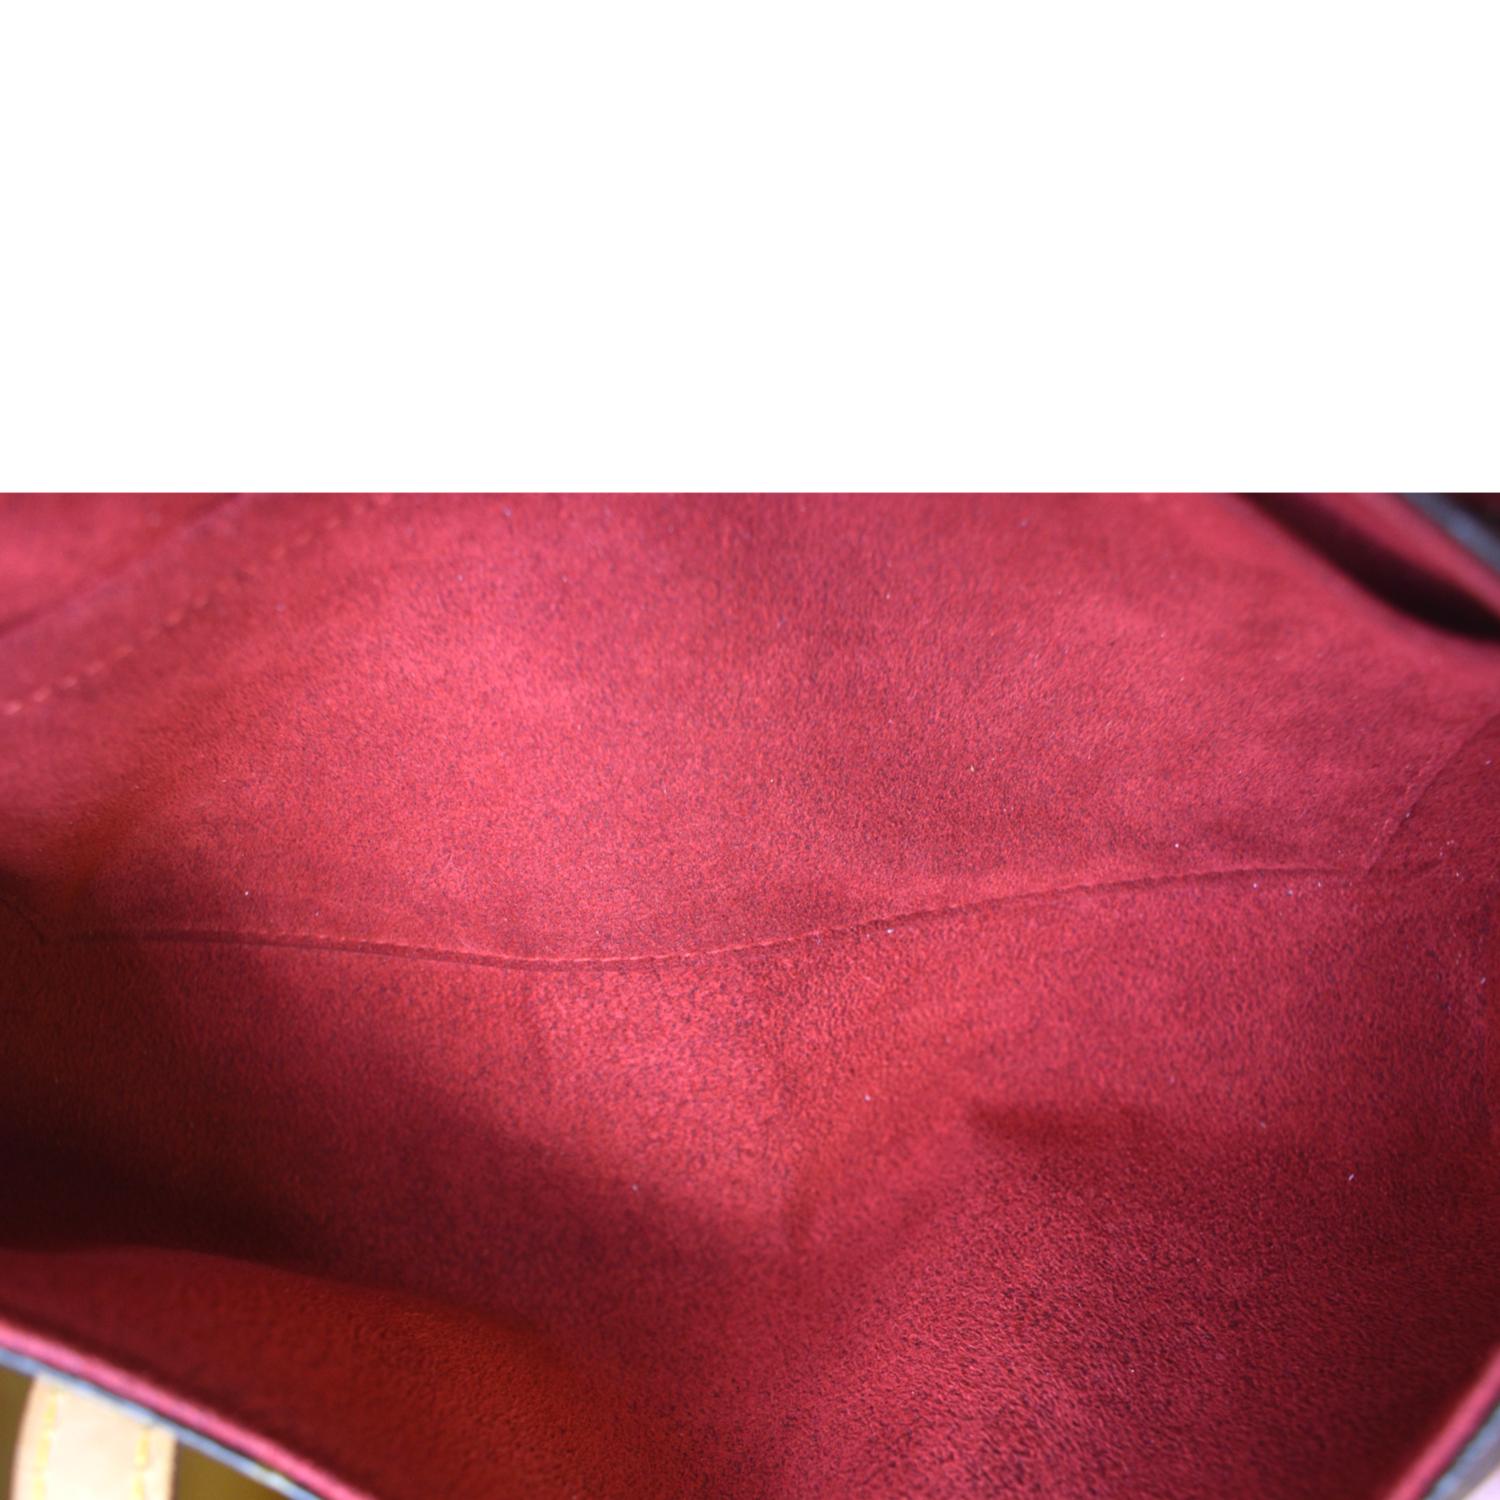 LOUIS VUITTON Sonatine M51902 Monogram Brown Women's handbag Canvas